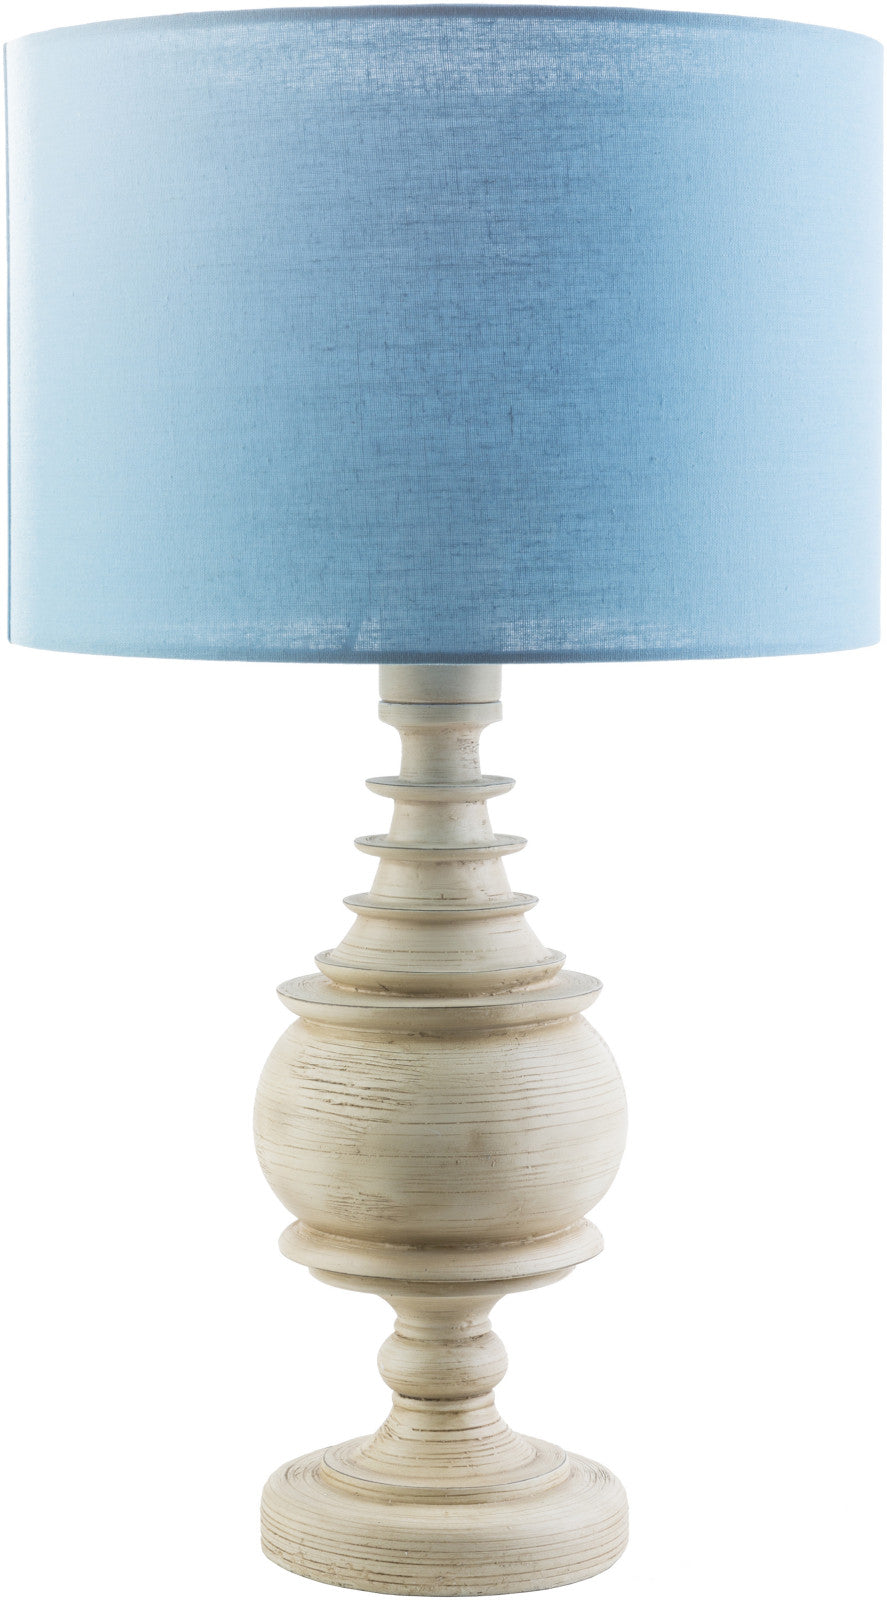 Surya Acacia ACC-561 Aqua Lamp Table Lamp